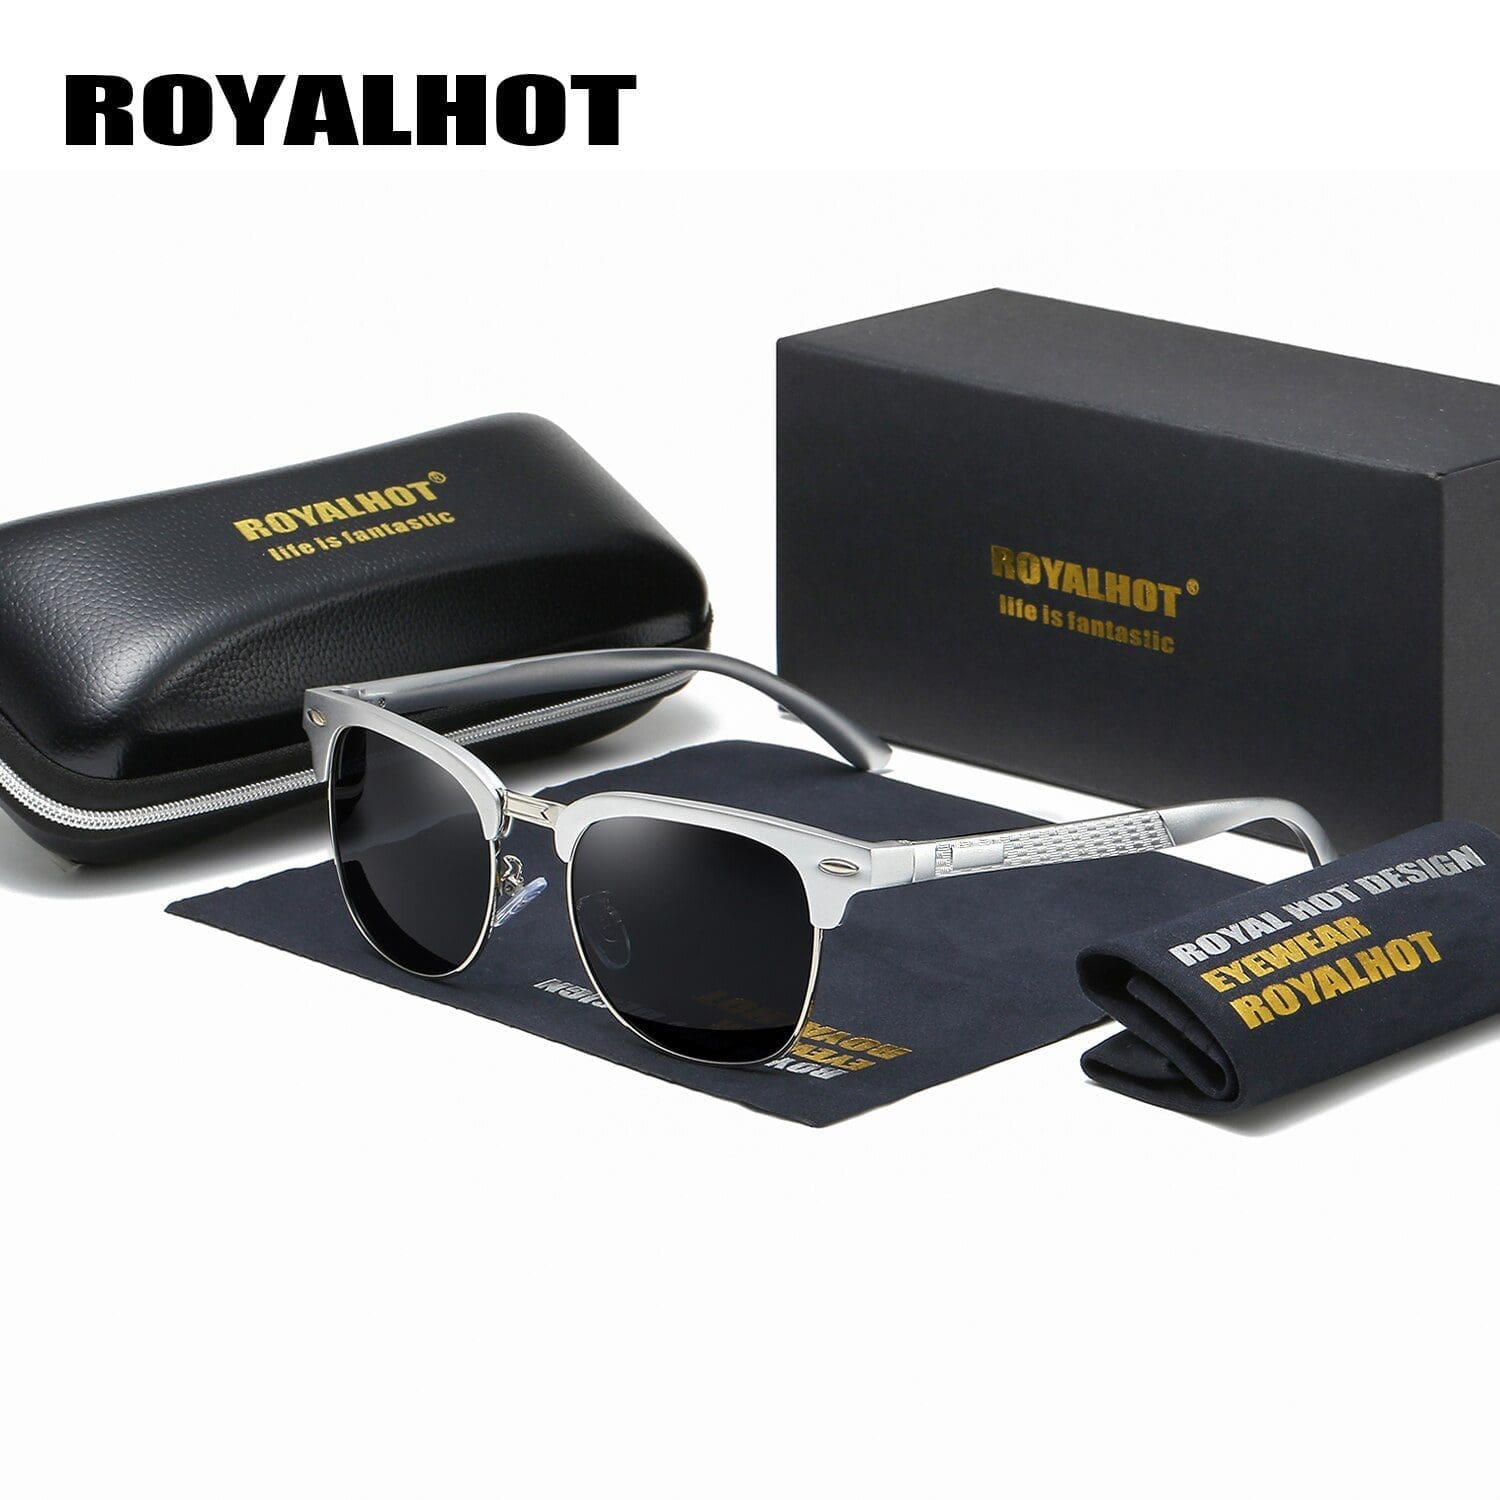 Royal Hot Polarized Aluminum Magnesium Half Frame Sunglasses 7